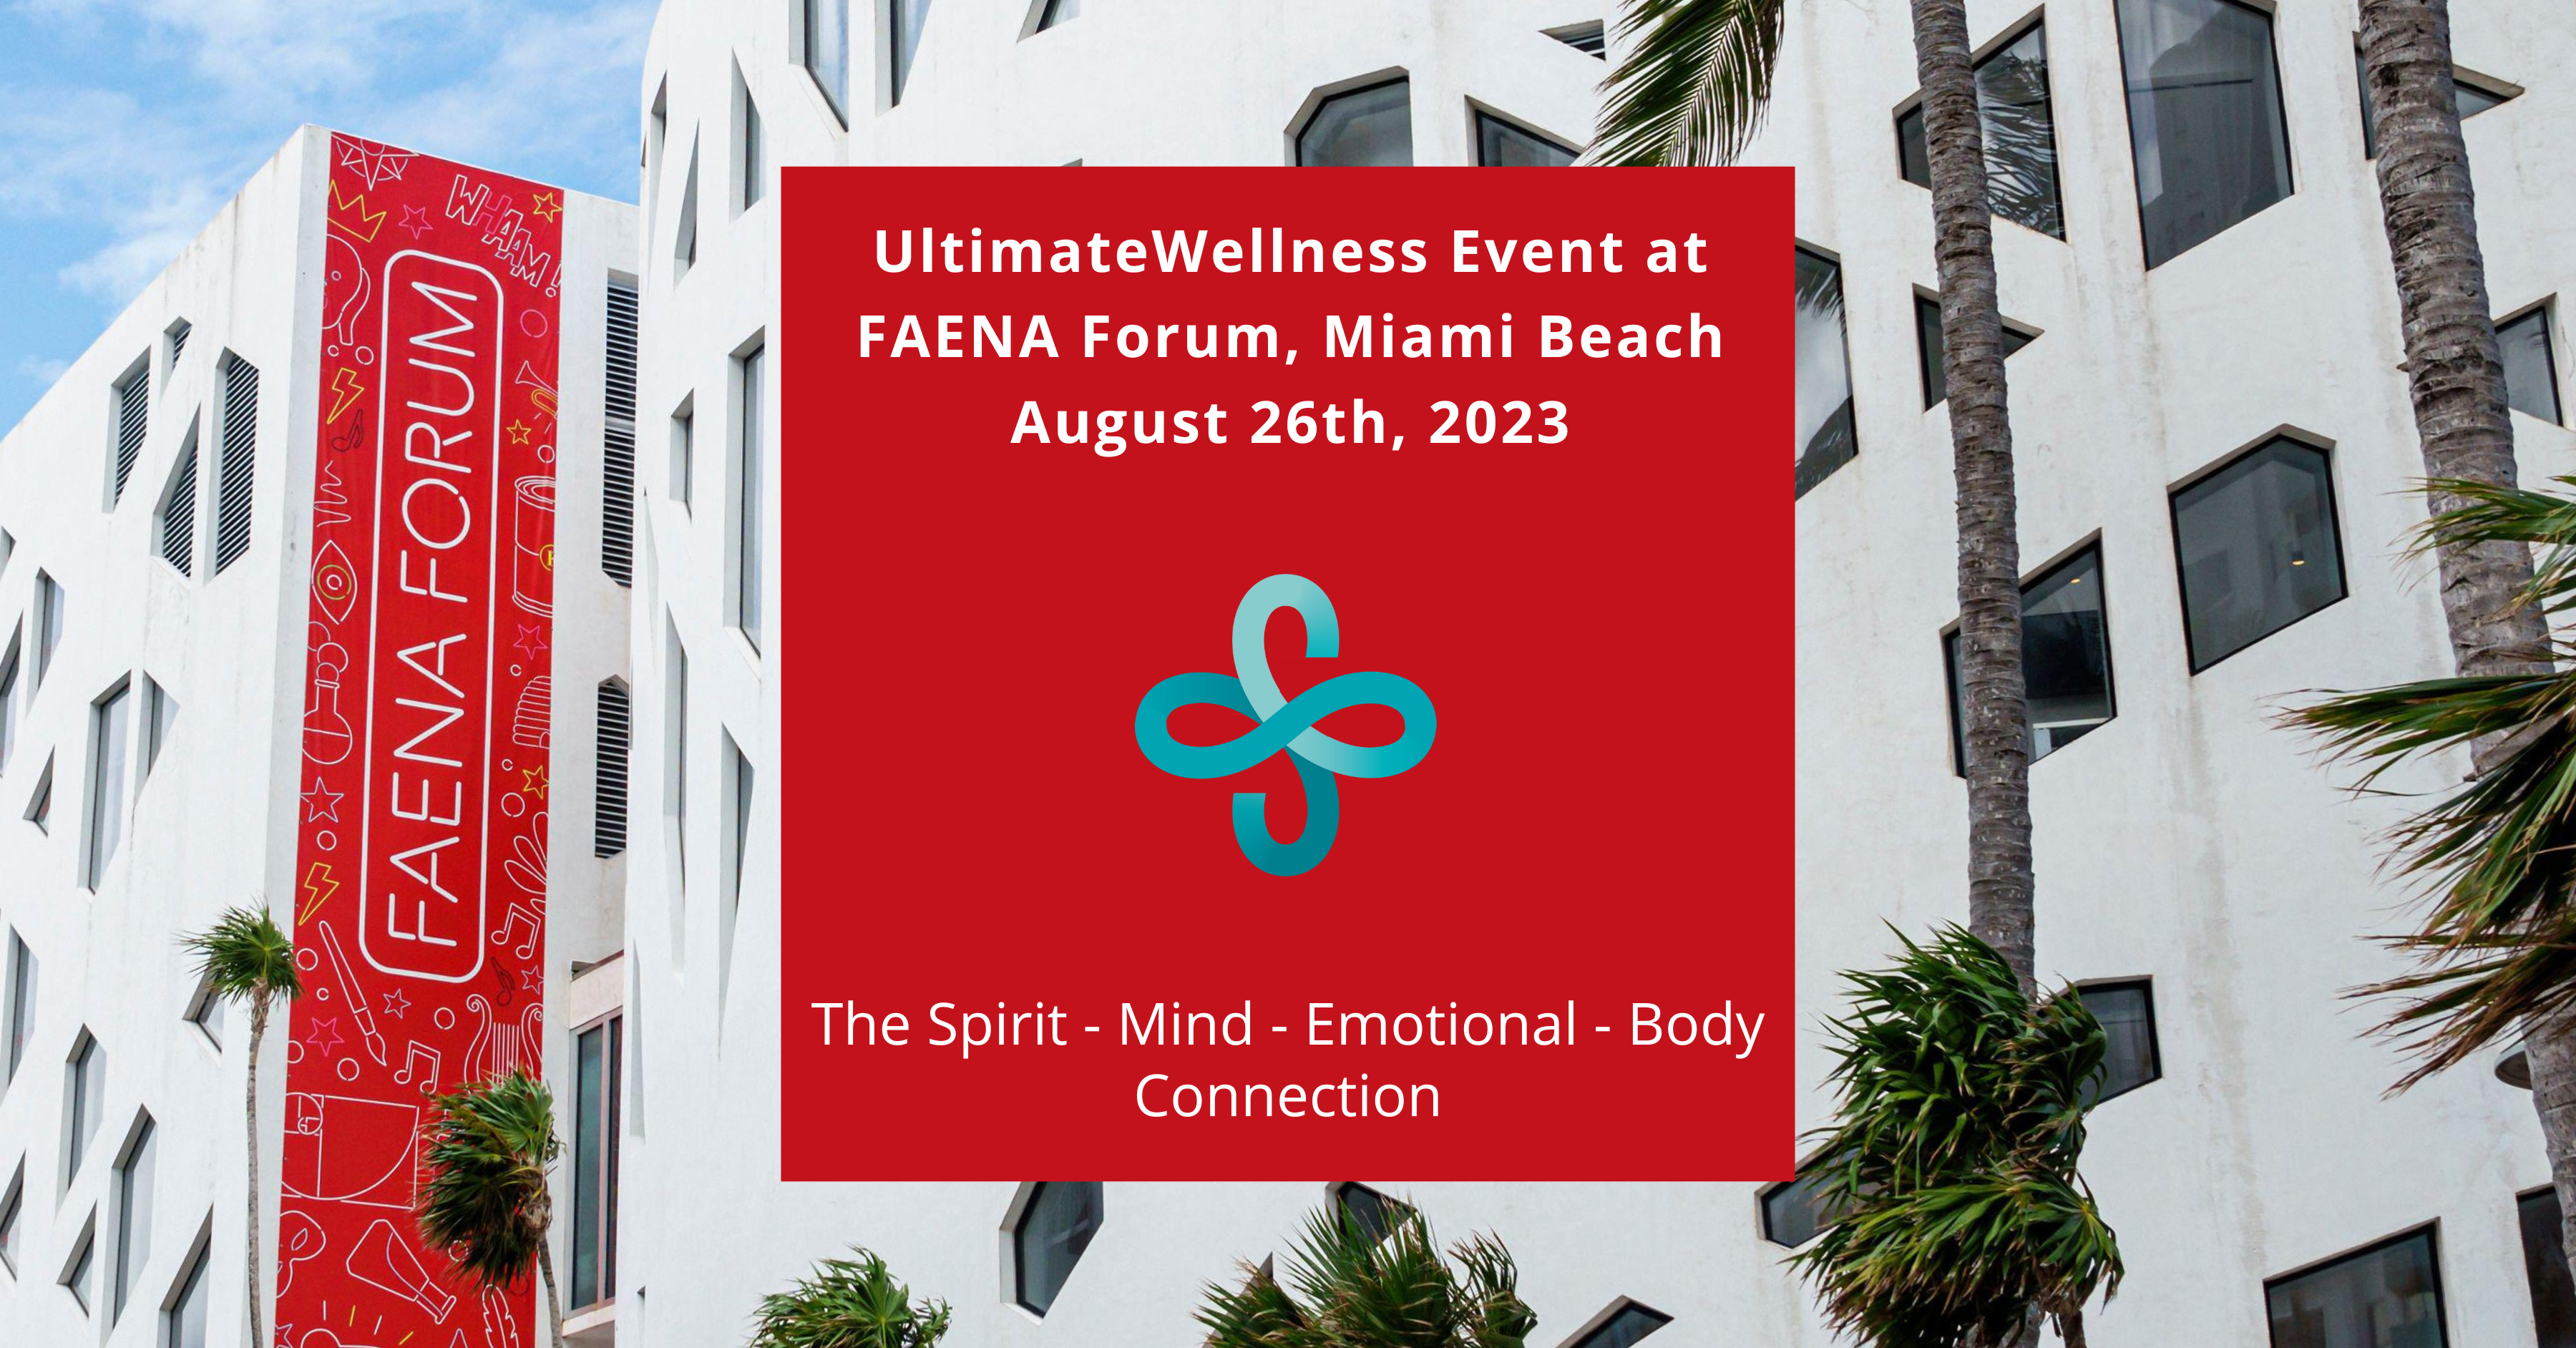 Ultimate Wellness Event at Faena Forum